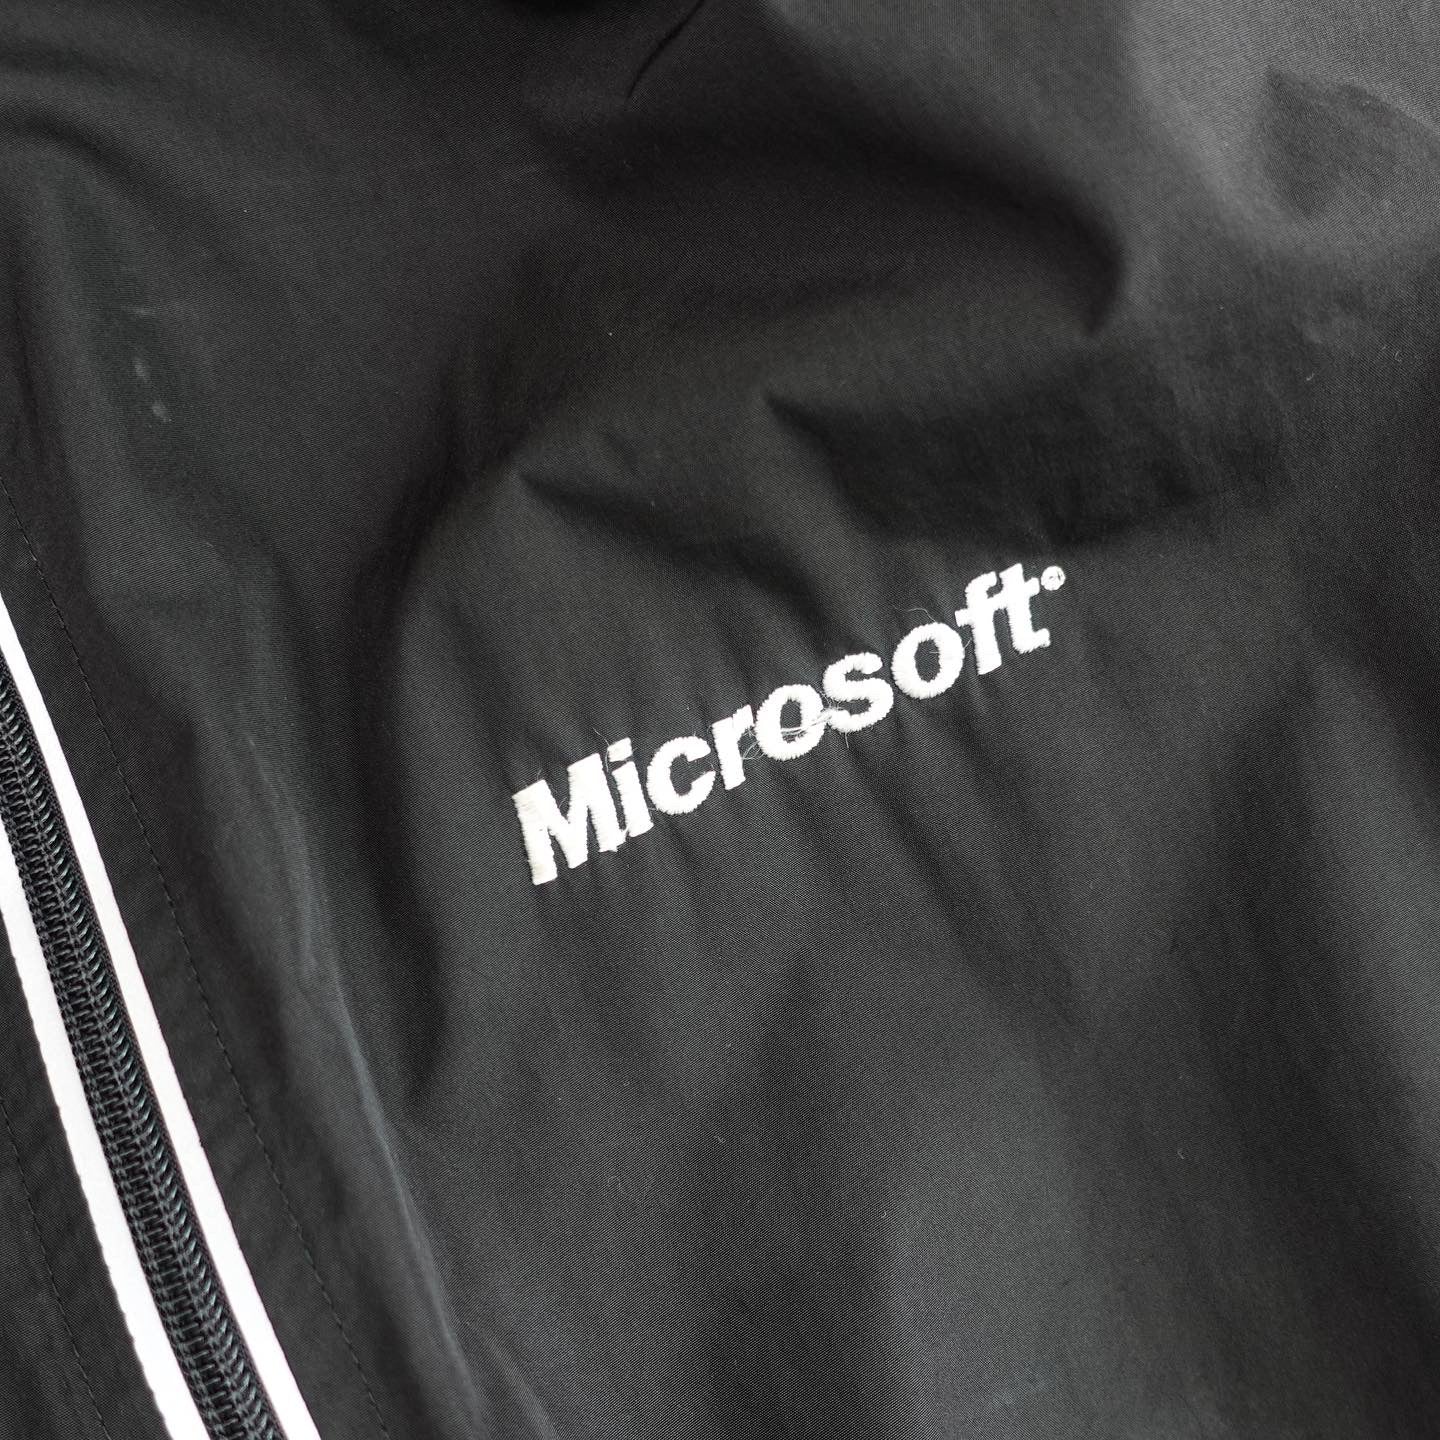 Old Microsoft Microfiber Jacket